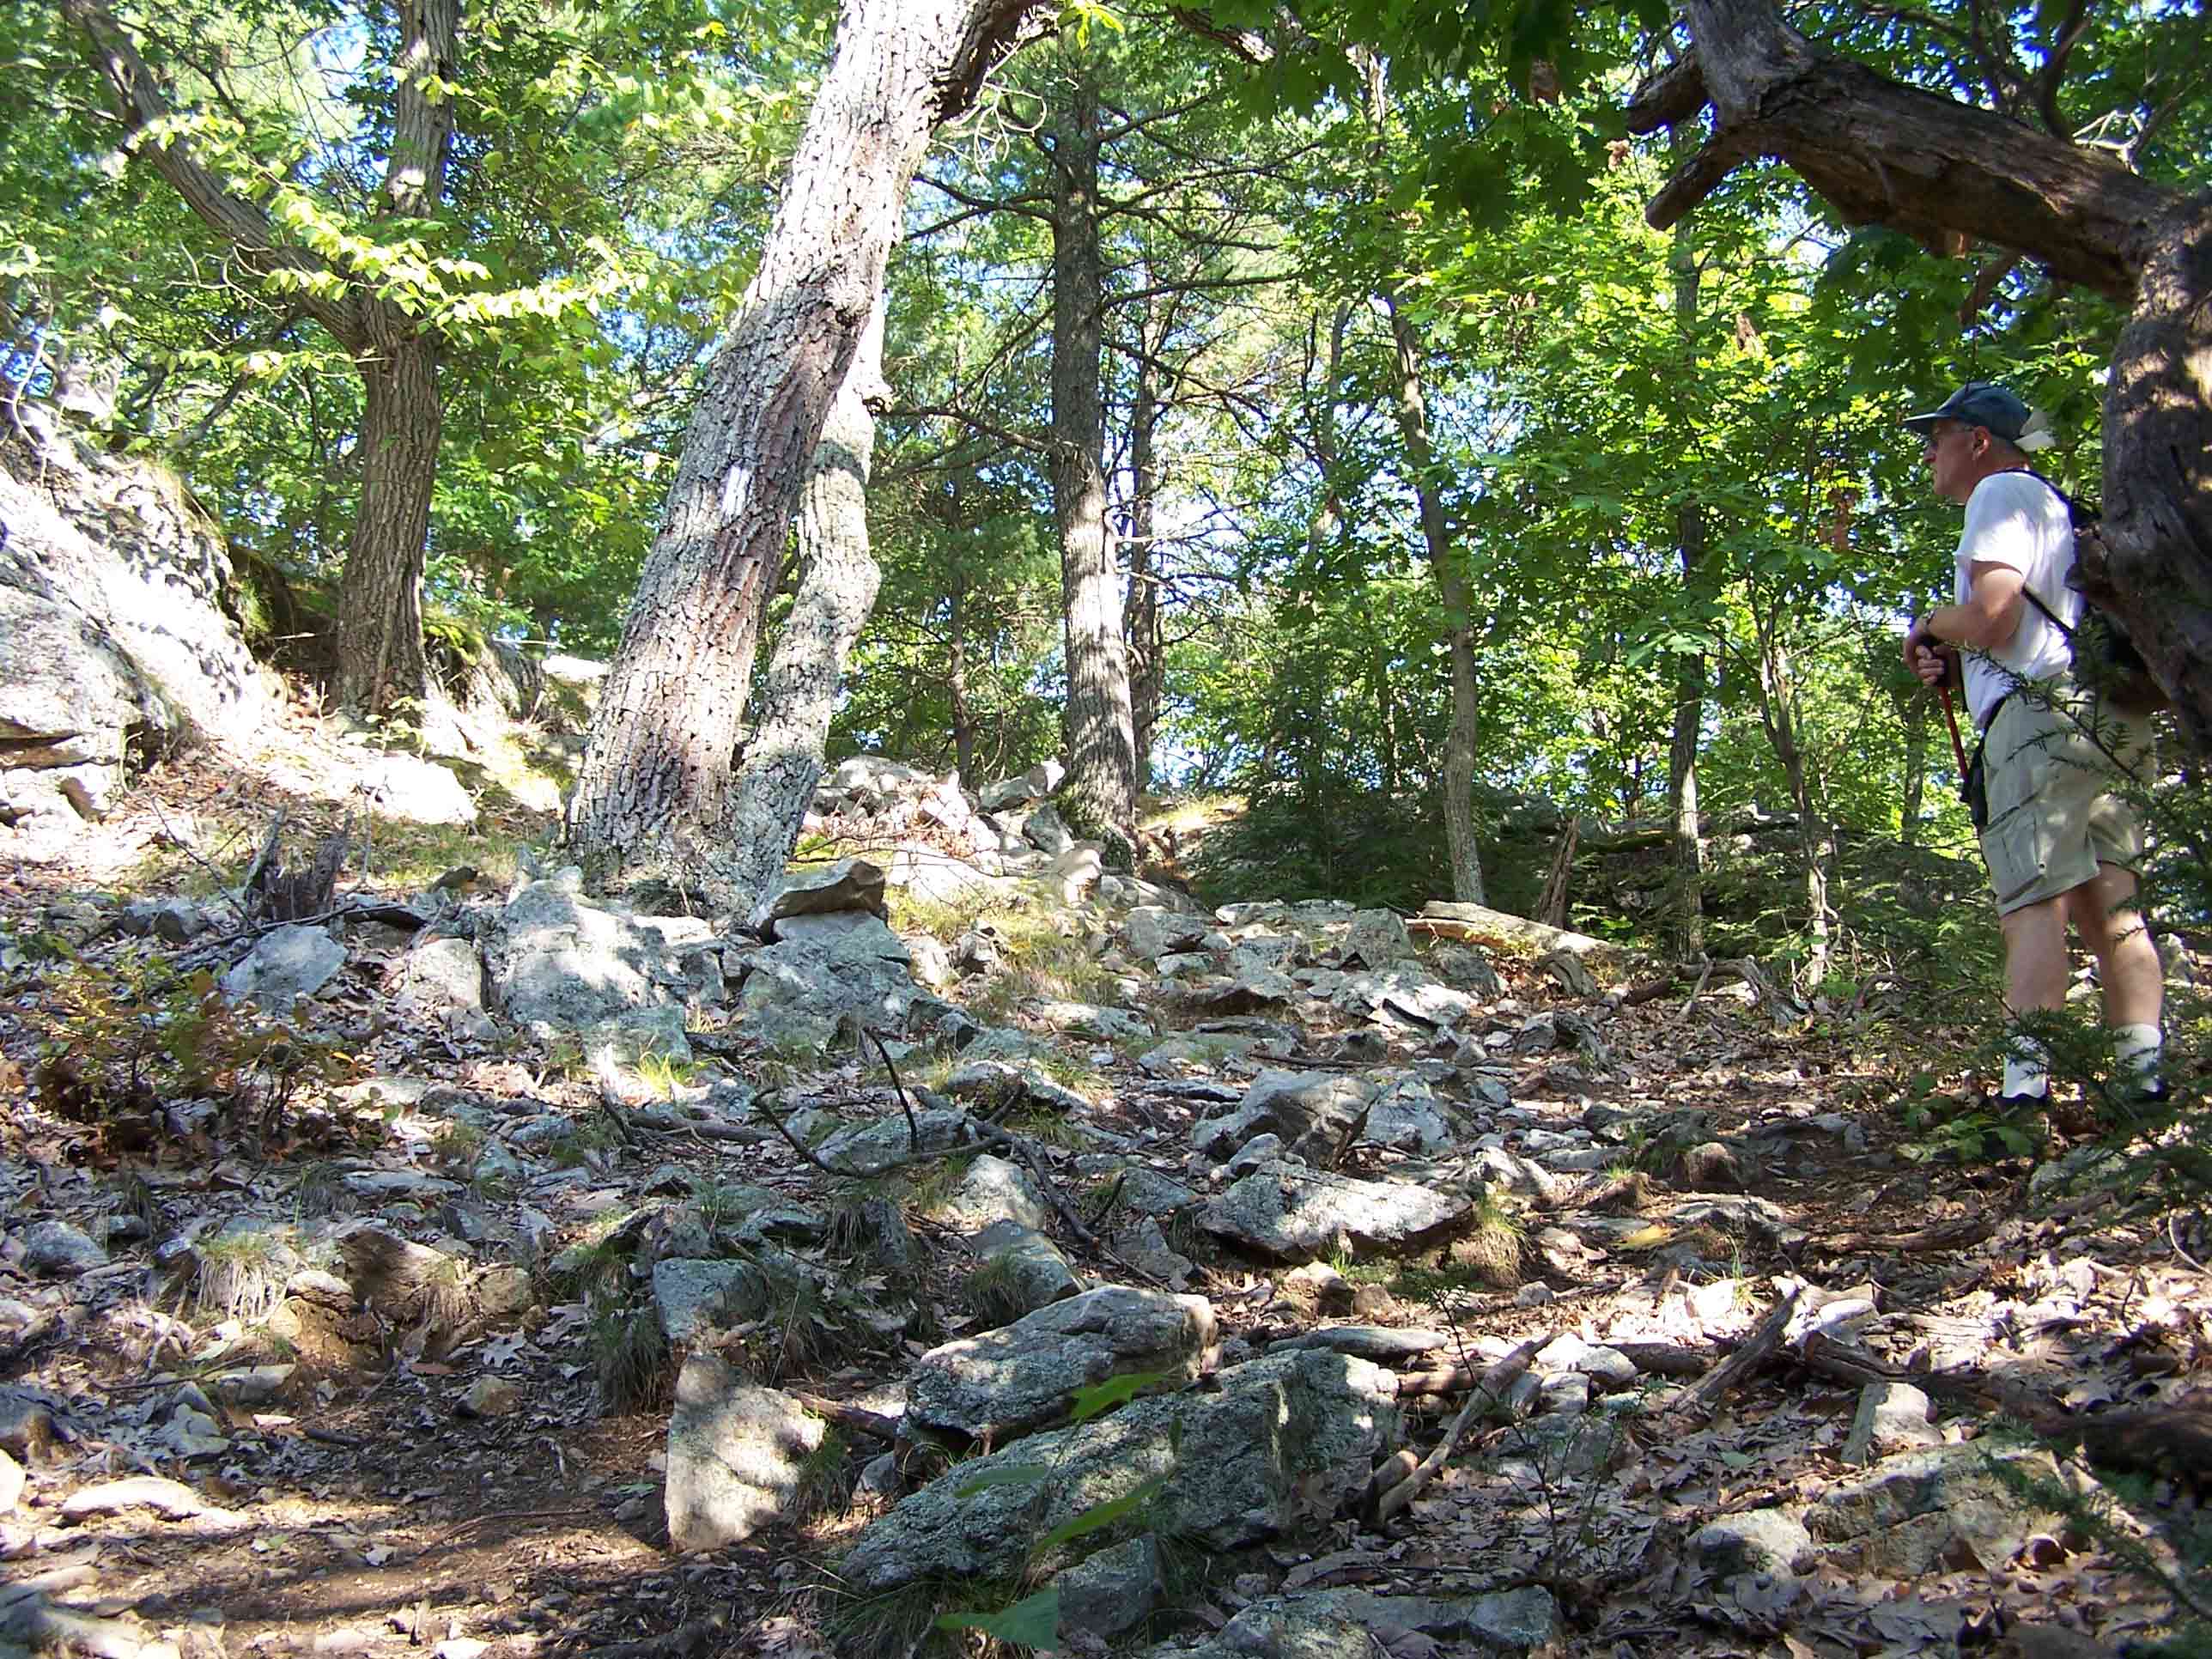 Steep climb through hemlock grove. Courtesy at@rohland.org